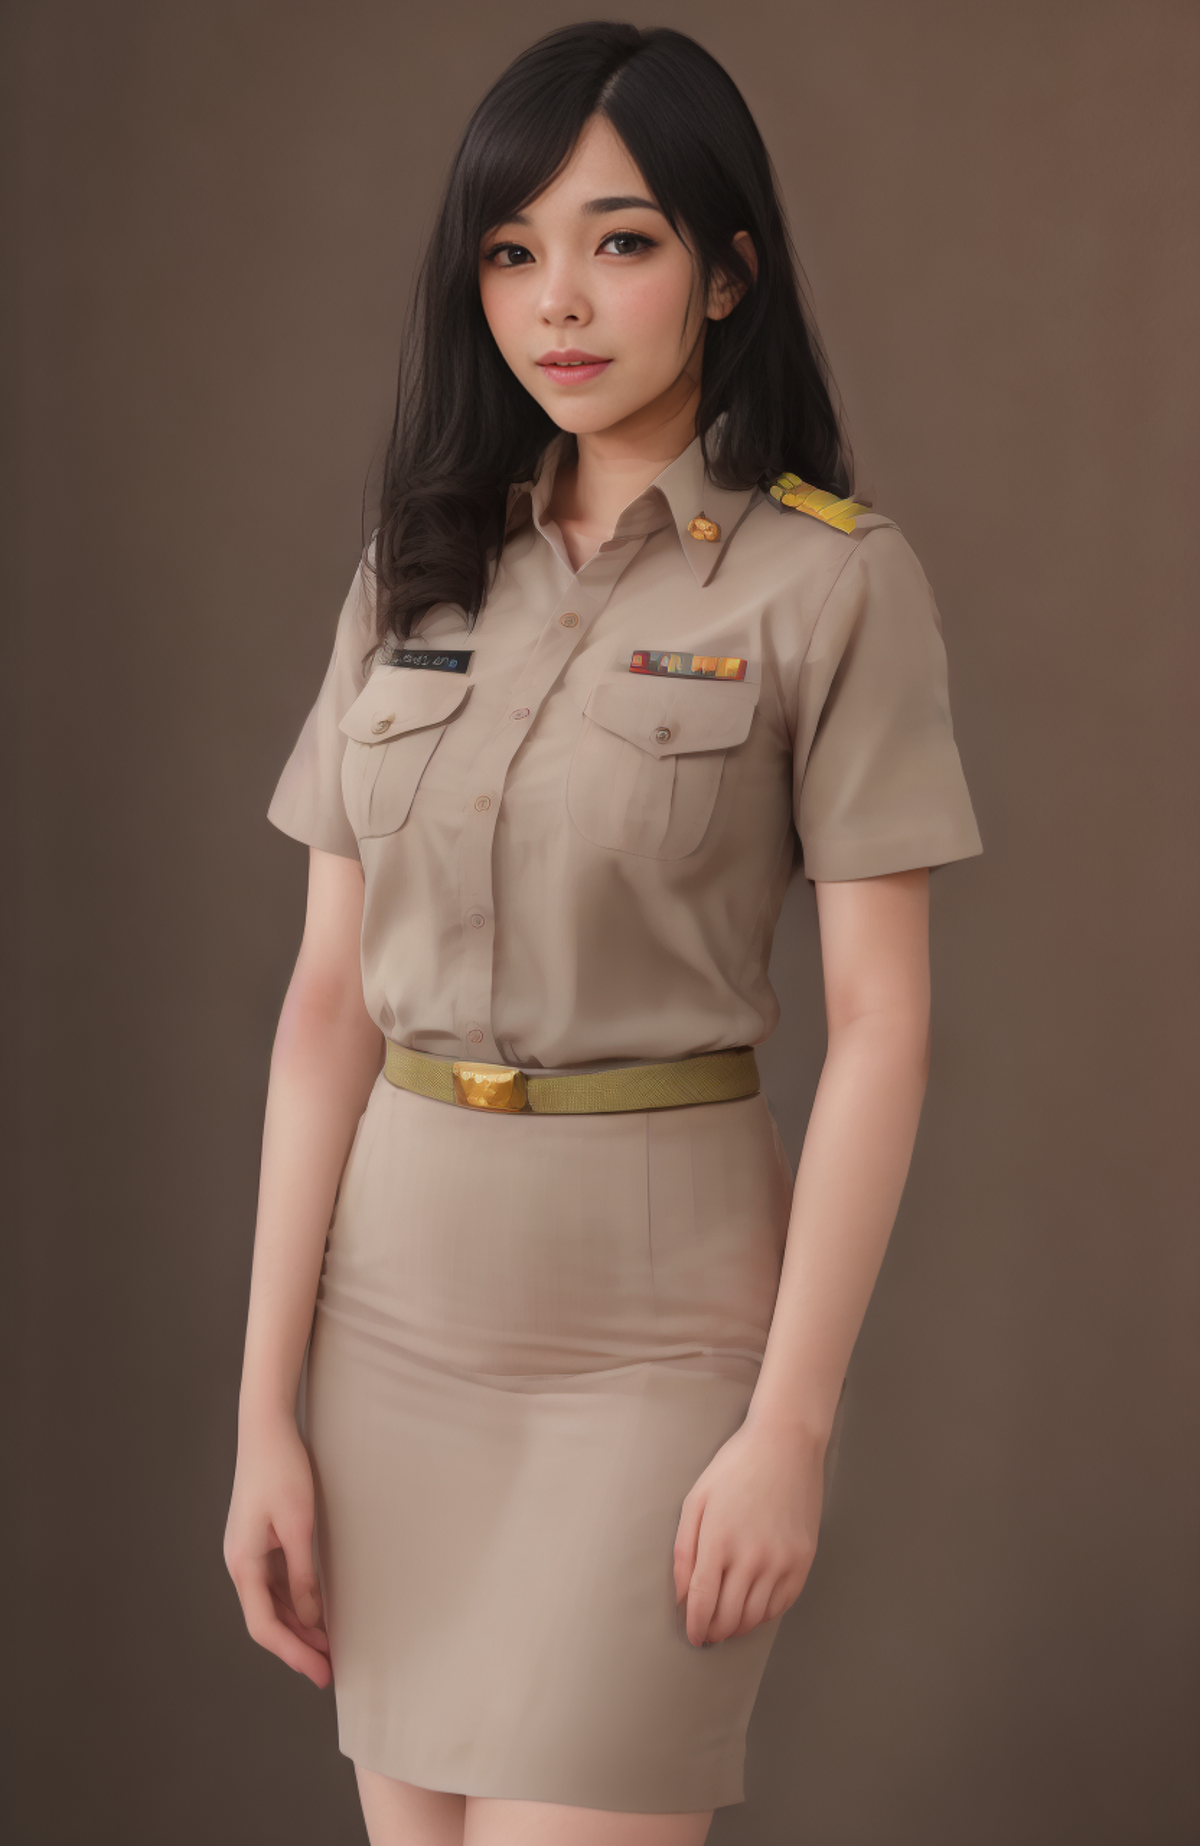 Thai female teacher uniform image by bearcutsticker